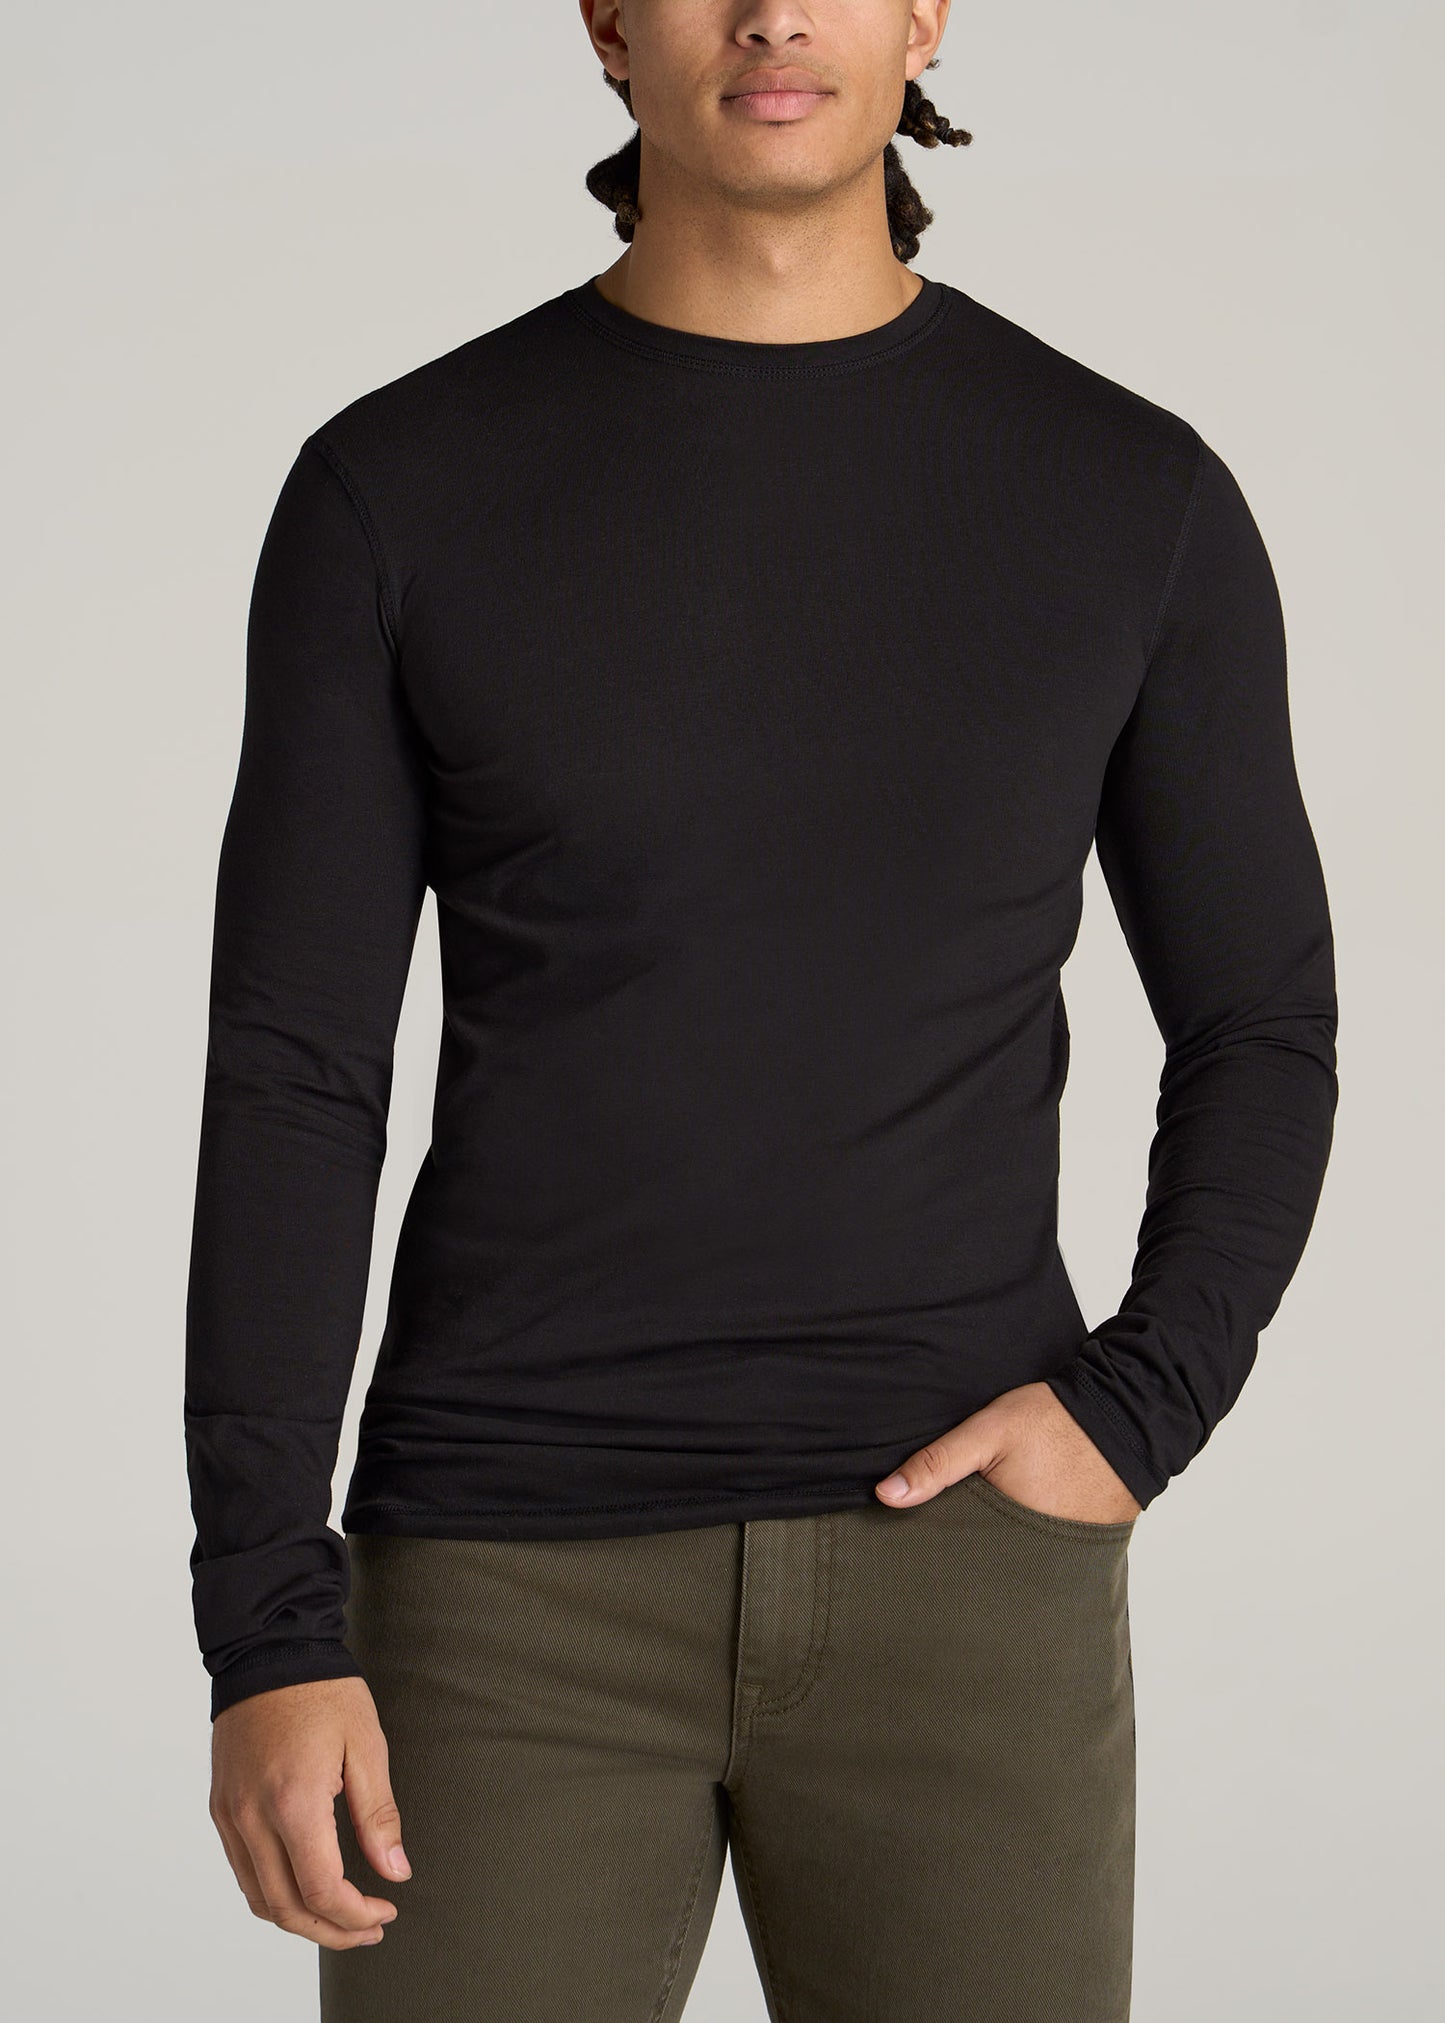 Long-sleeved Shirt Long Fit - Black - Men